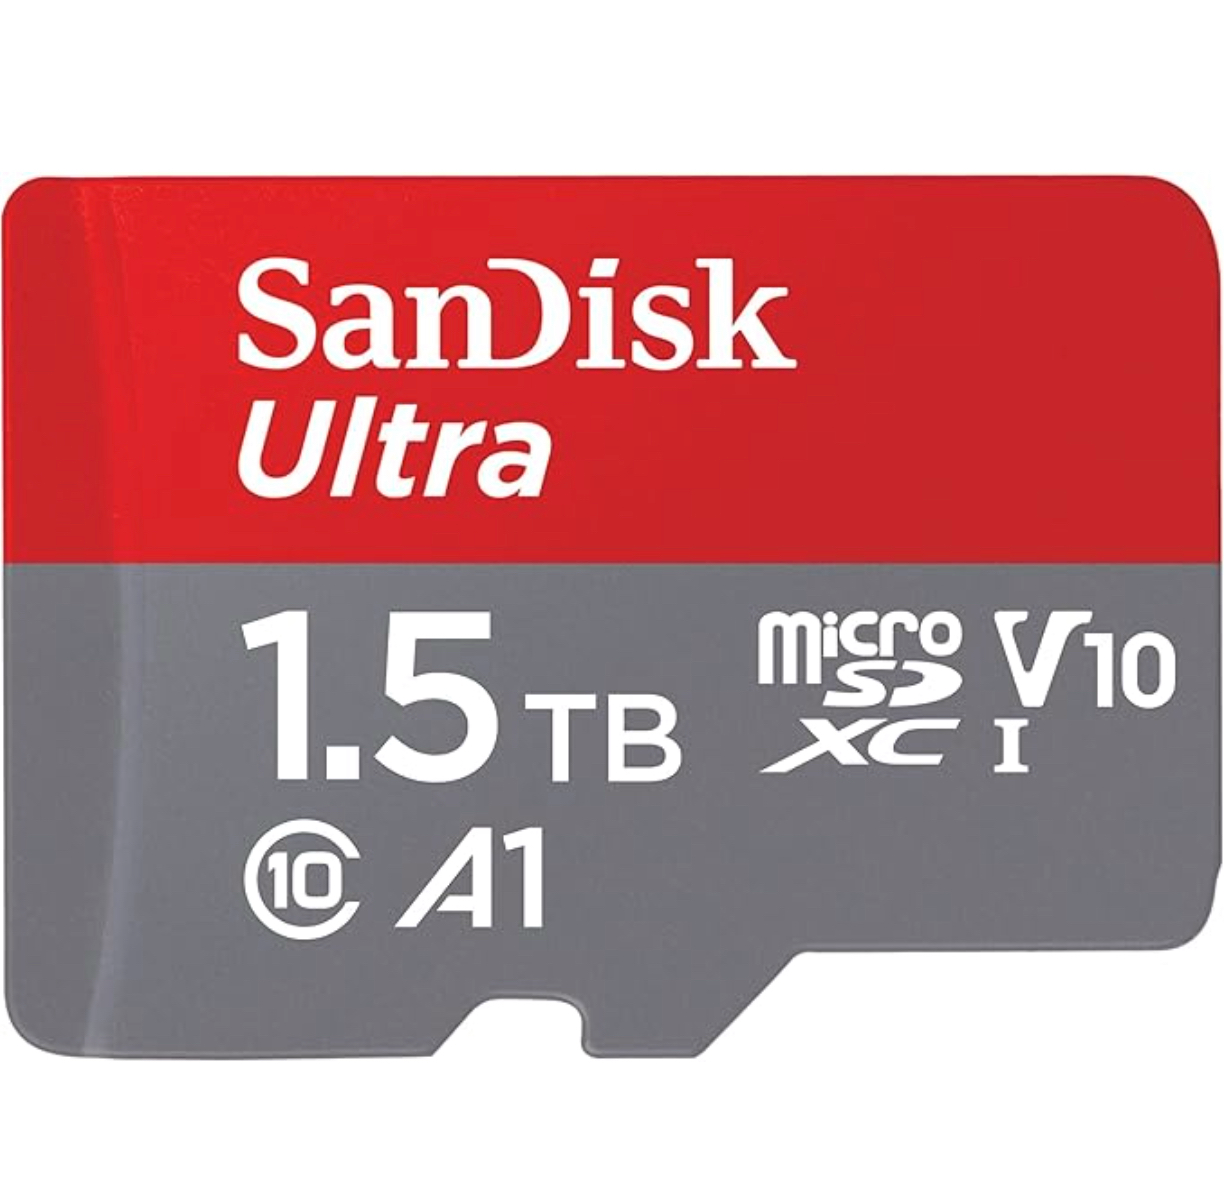 SanDisk 1.5TB microSDXC Ultra card. 